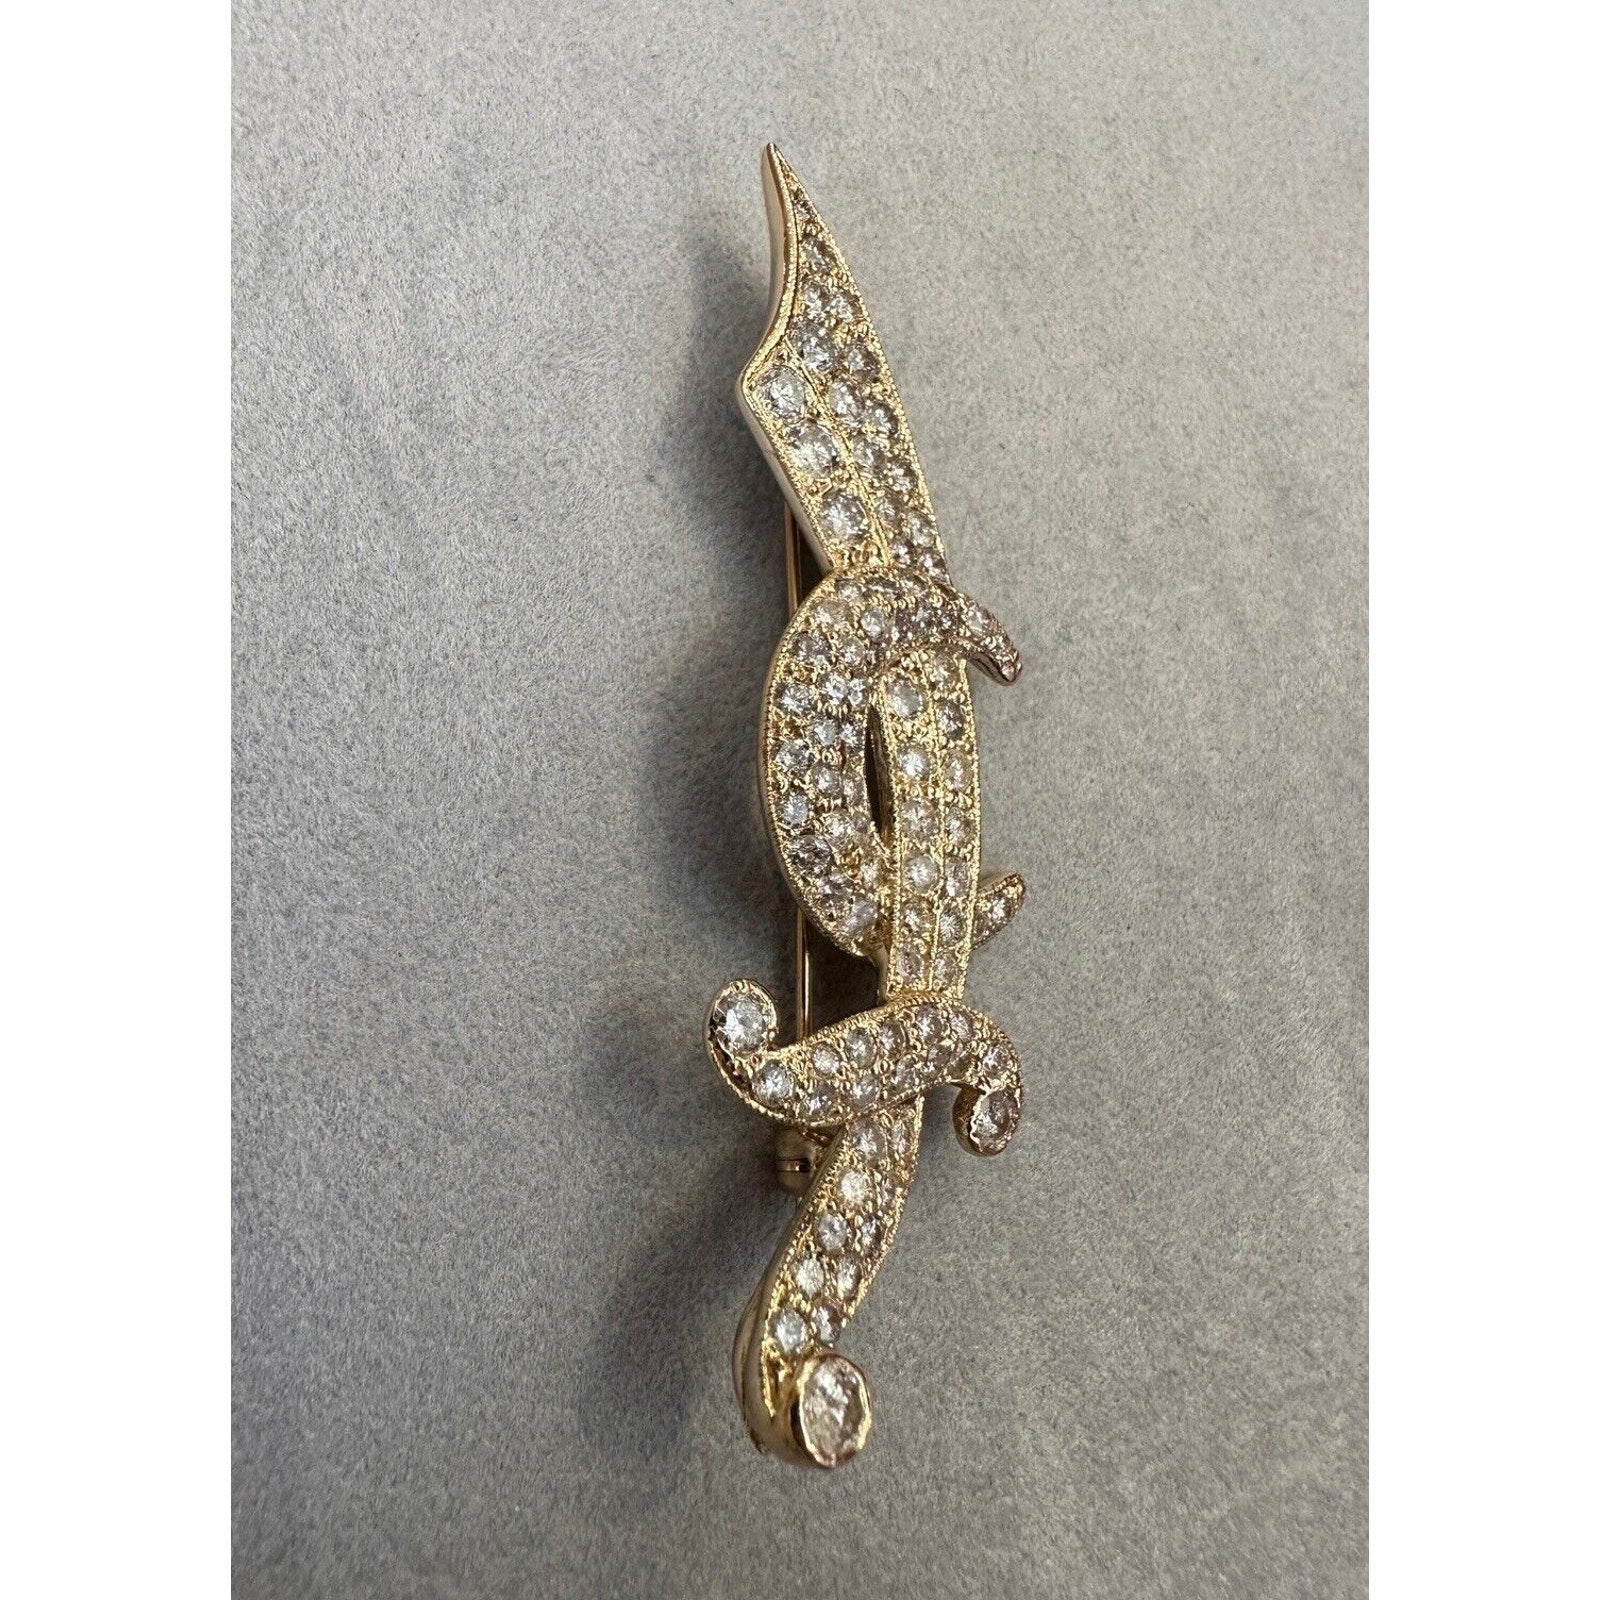 Sword & Crescent Moon Diamond Pin Brooch 3.50cttw in 14k Yellow Gold - HM2566SR